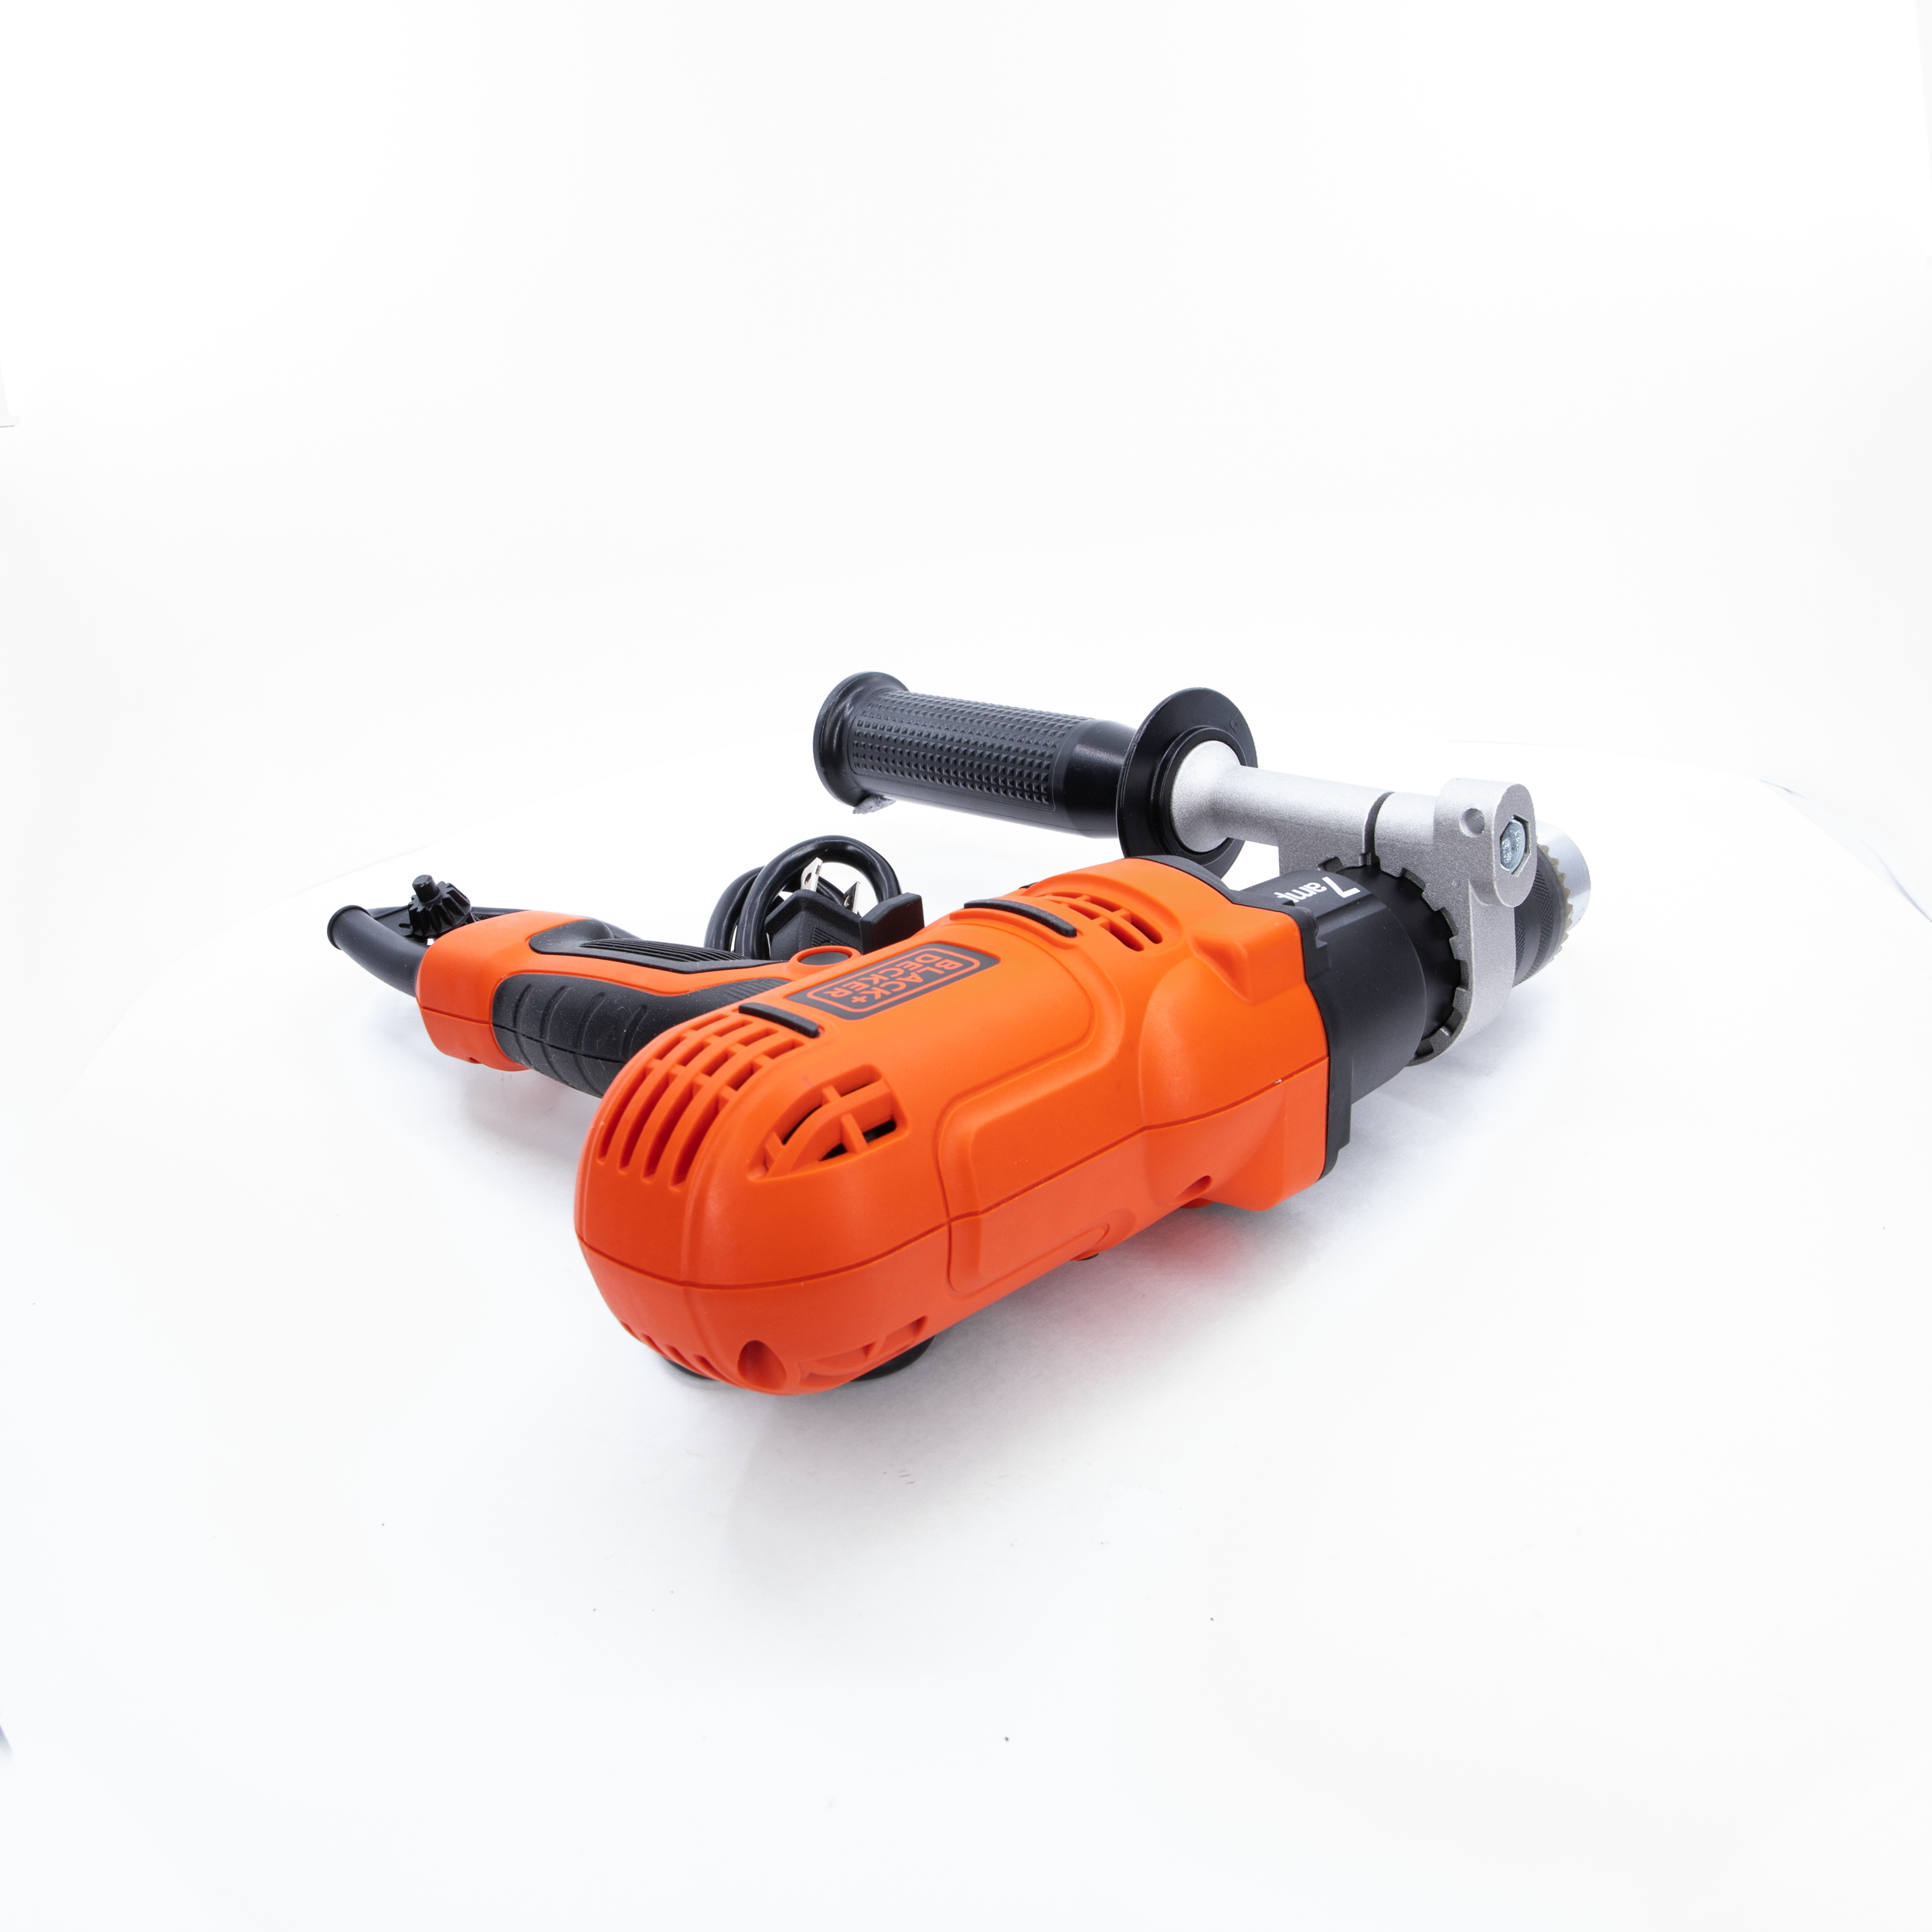 Buy Black Decker 550 W Plastic Reversible Hammer Drill Machine